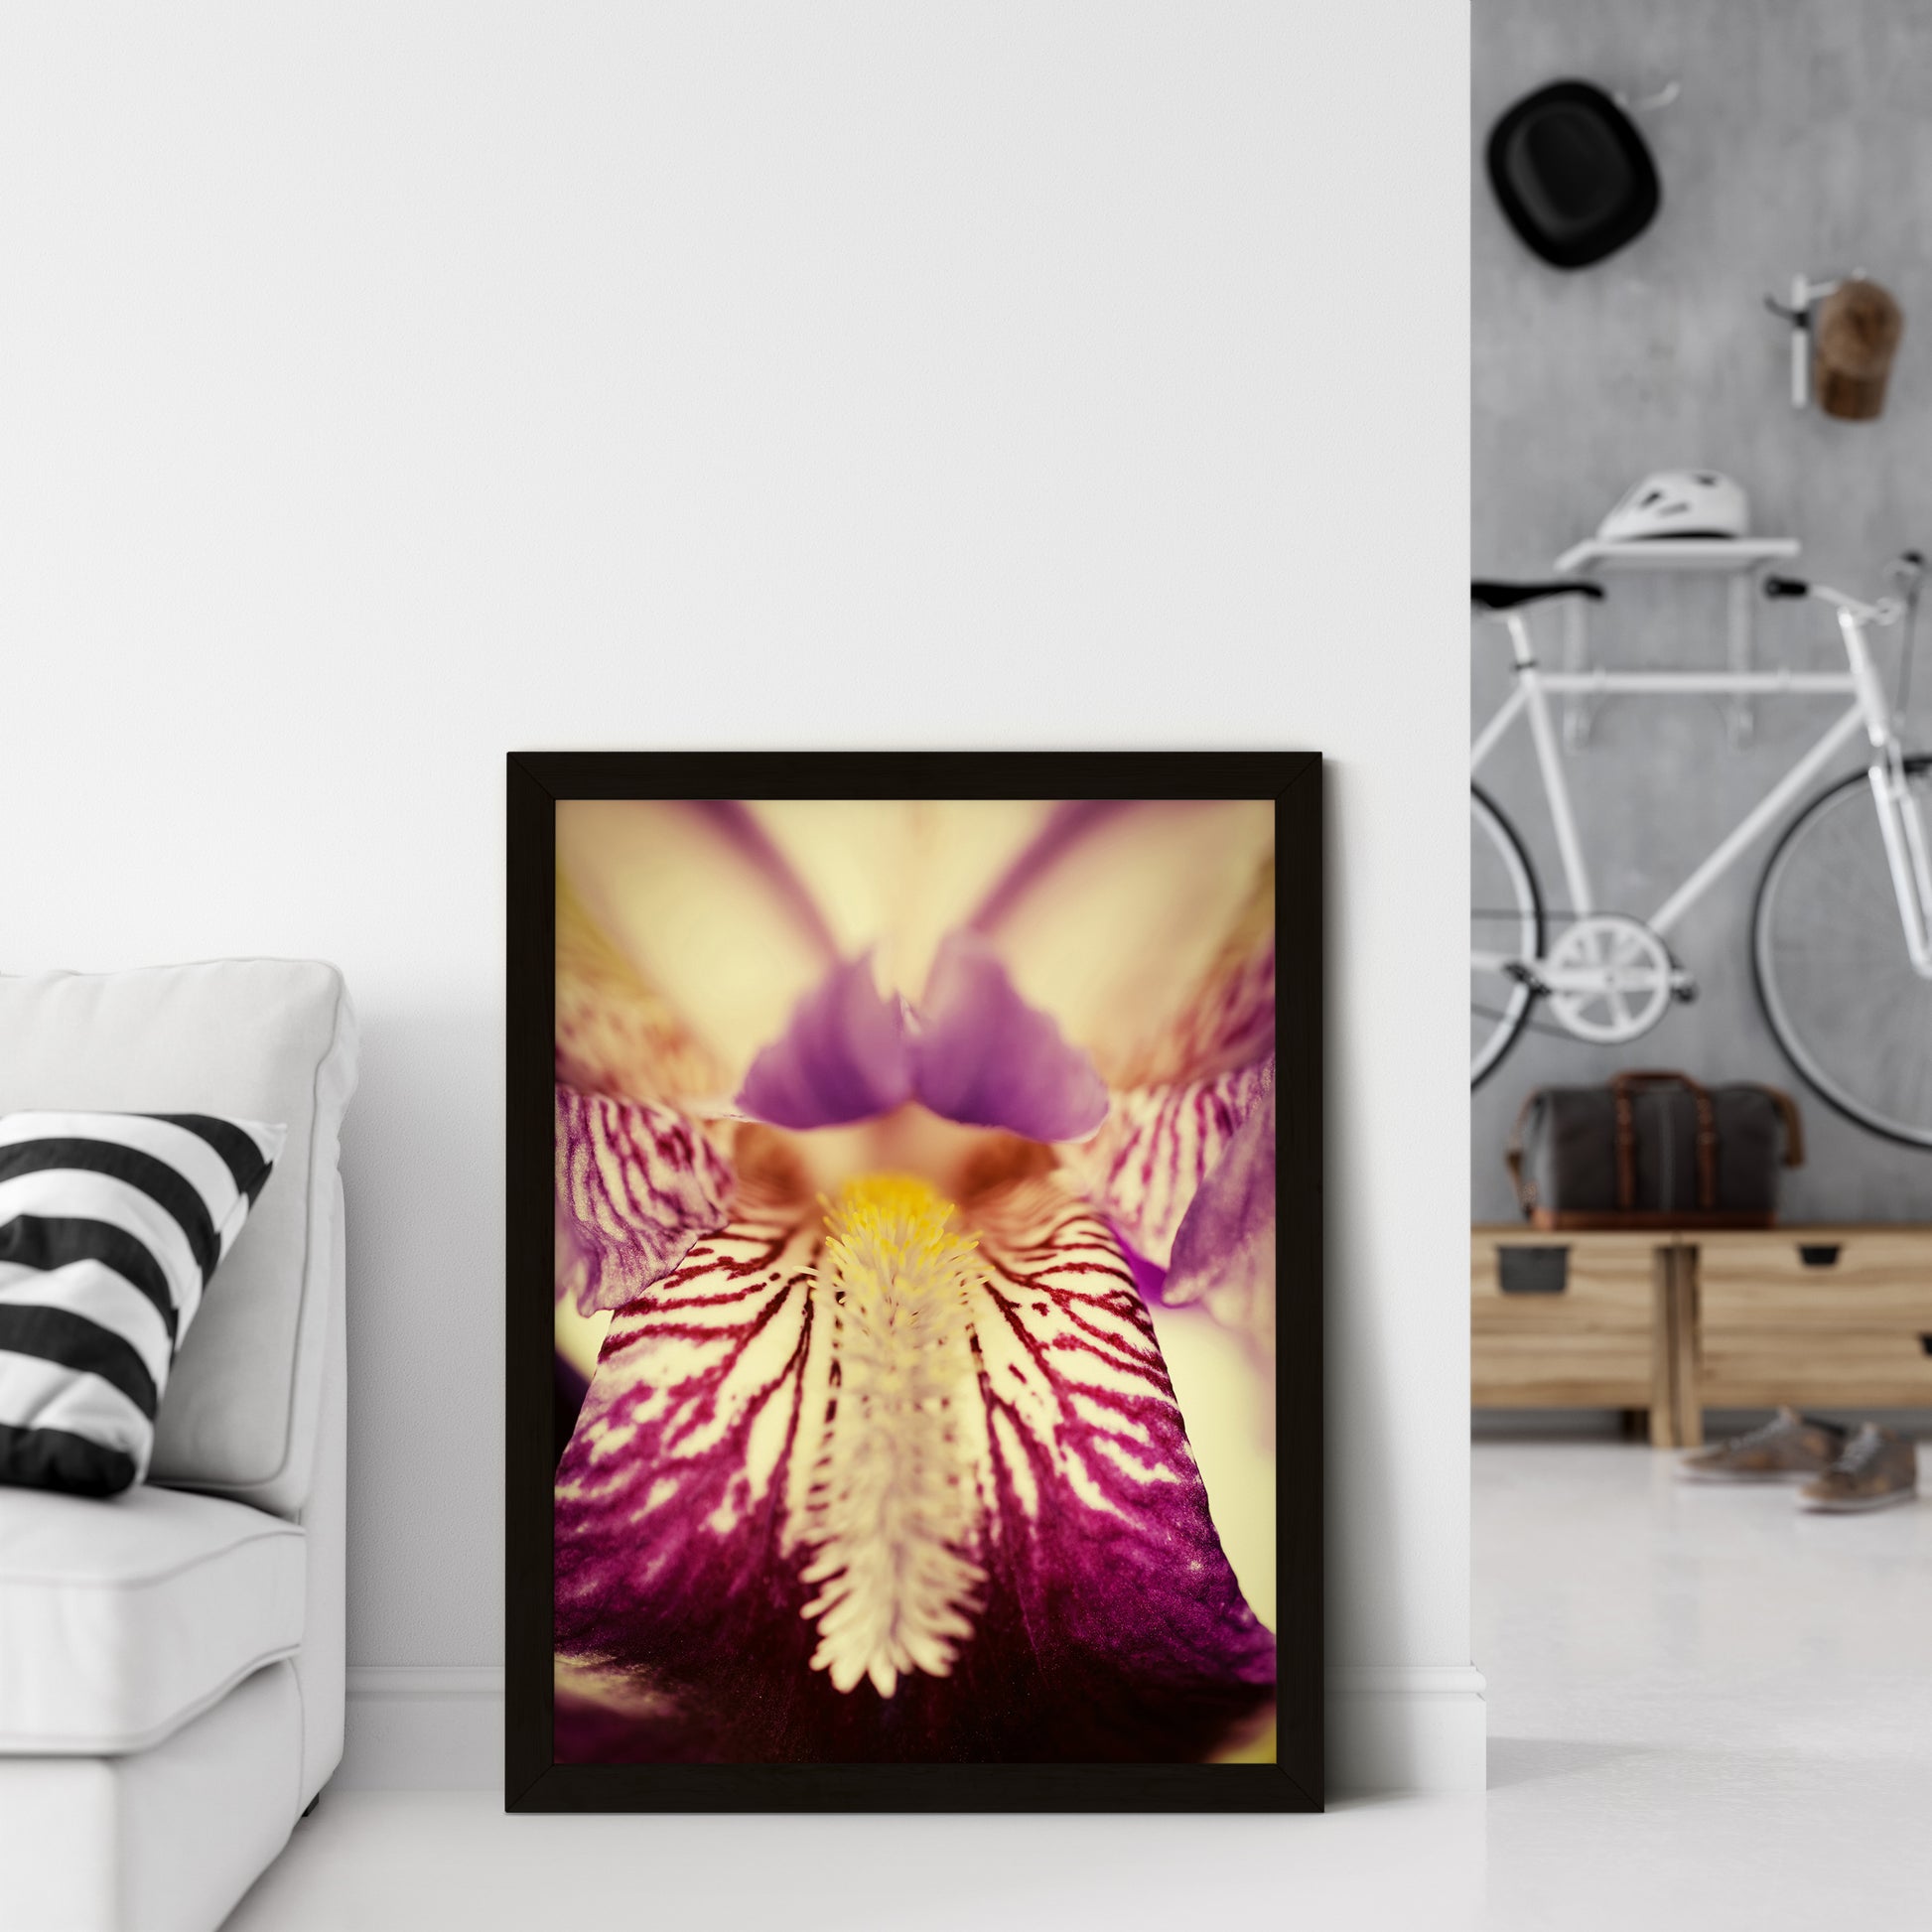 Framed Art Prints For Living Room: Antiqued Iris Floral / Flora / Botanical / Nature Photo Framed Wall Art Print - Artwork - Modern Wall Decor